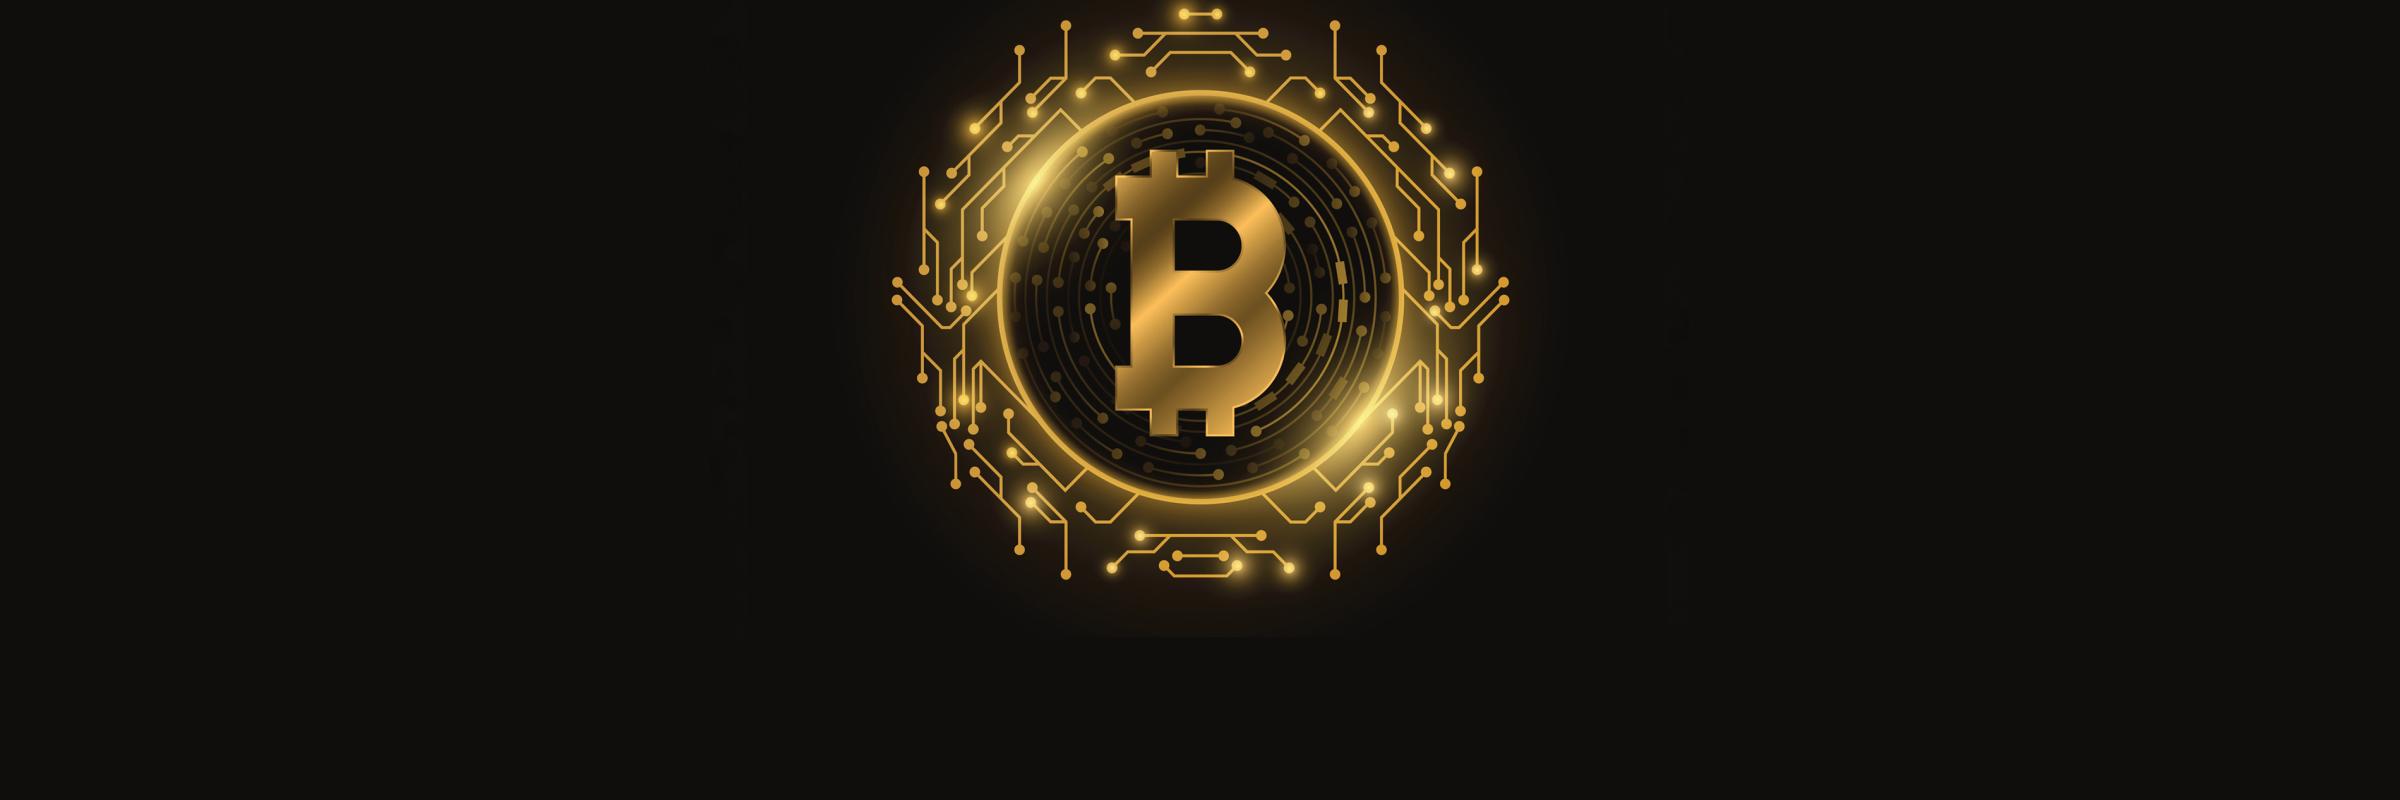 A glowing, gold Bitcoin logo